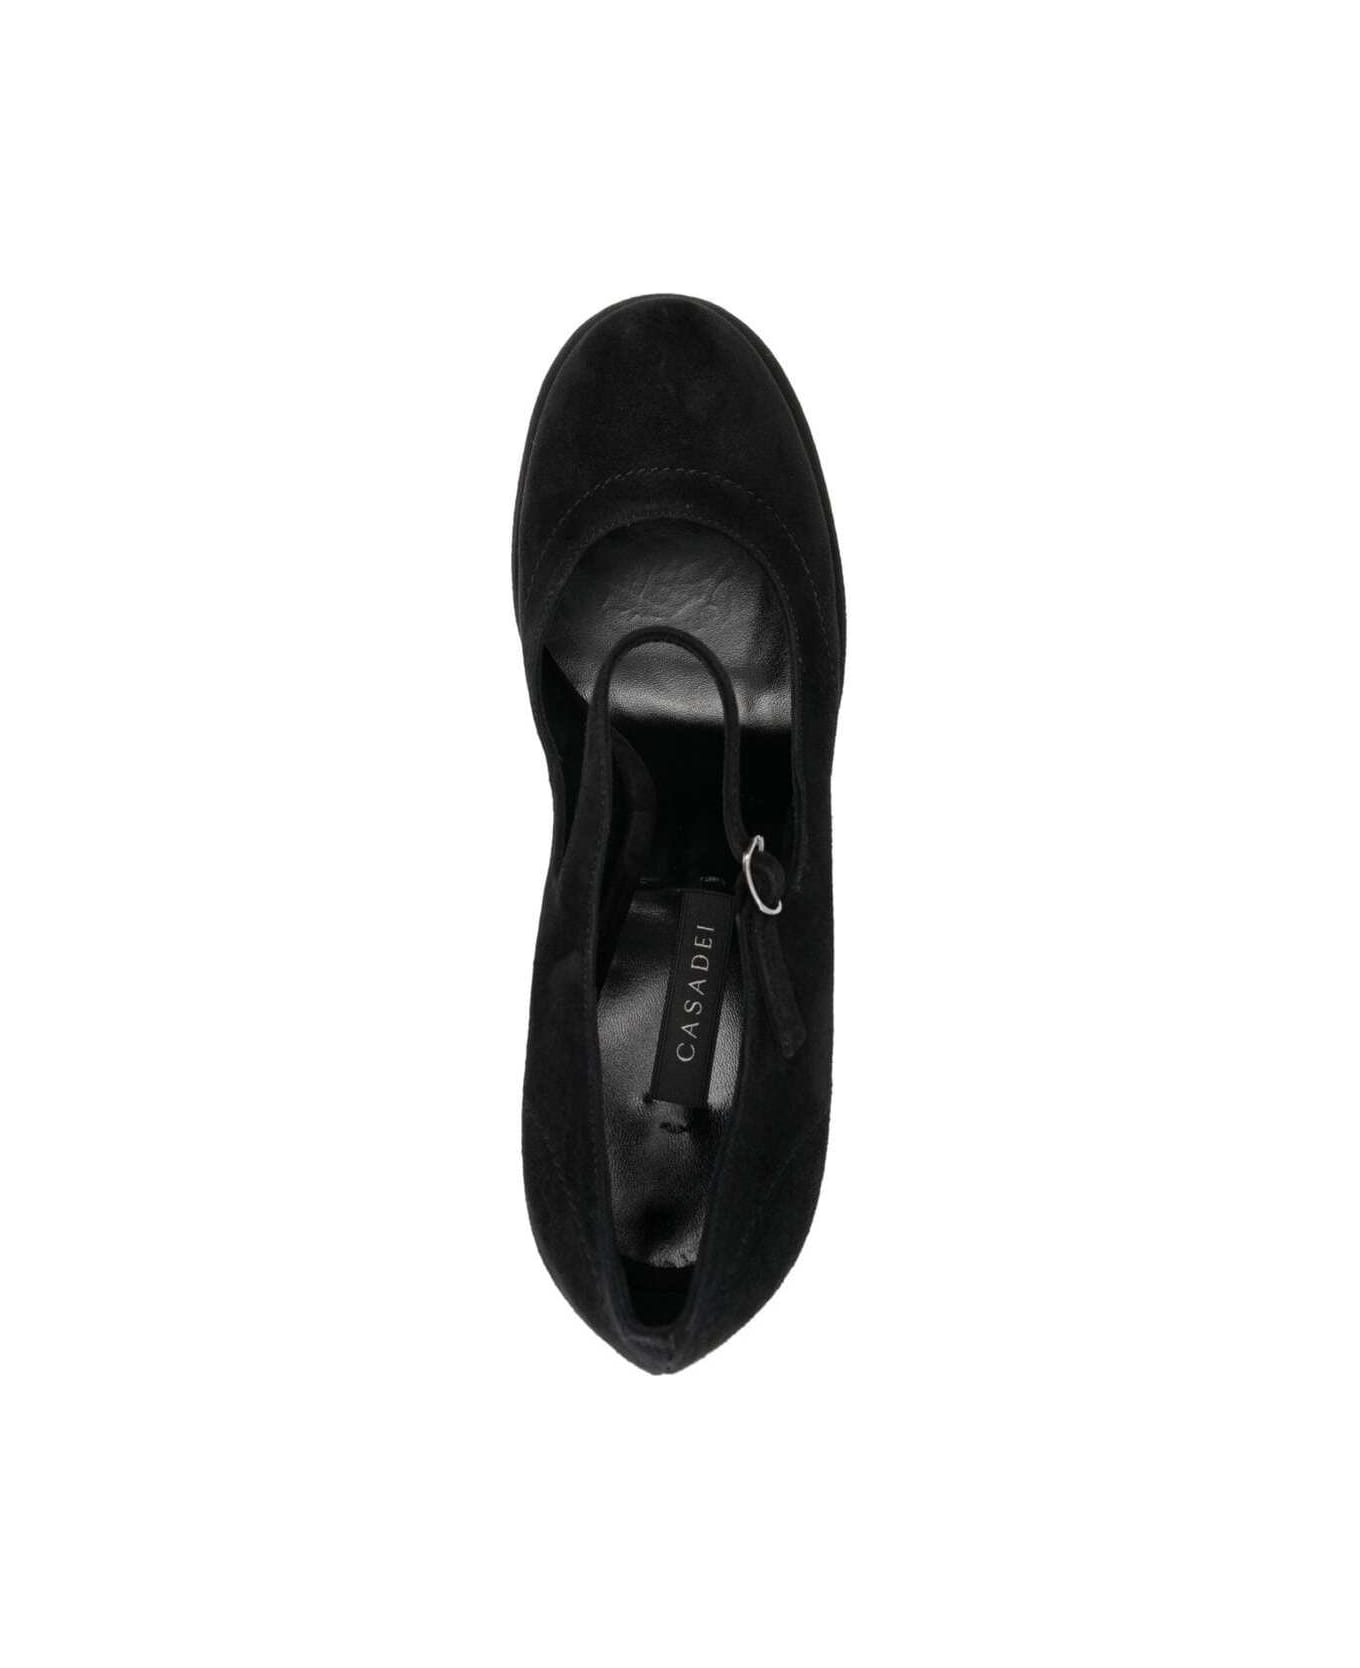 Casadei Mary Jane Rock Black Suede Heeled Sandals With Instep Strap And Platform - Black